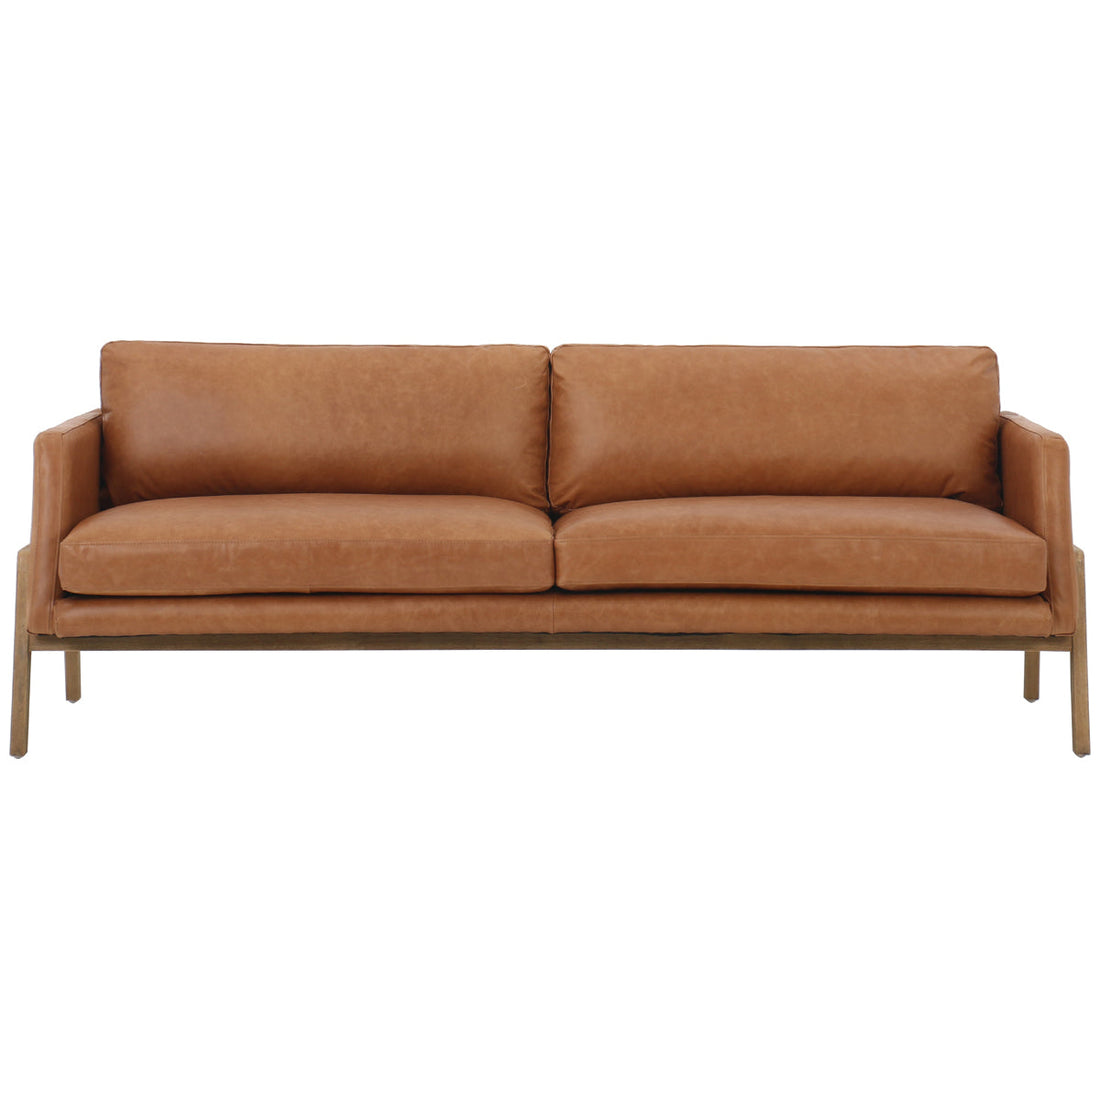 Four Hands Kensington Diana 84-Inch Leather Sofa